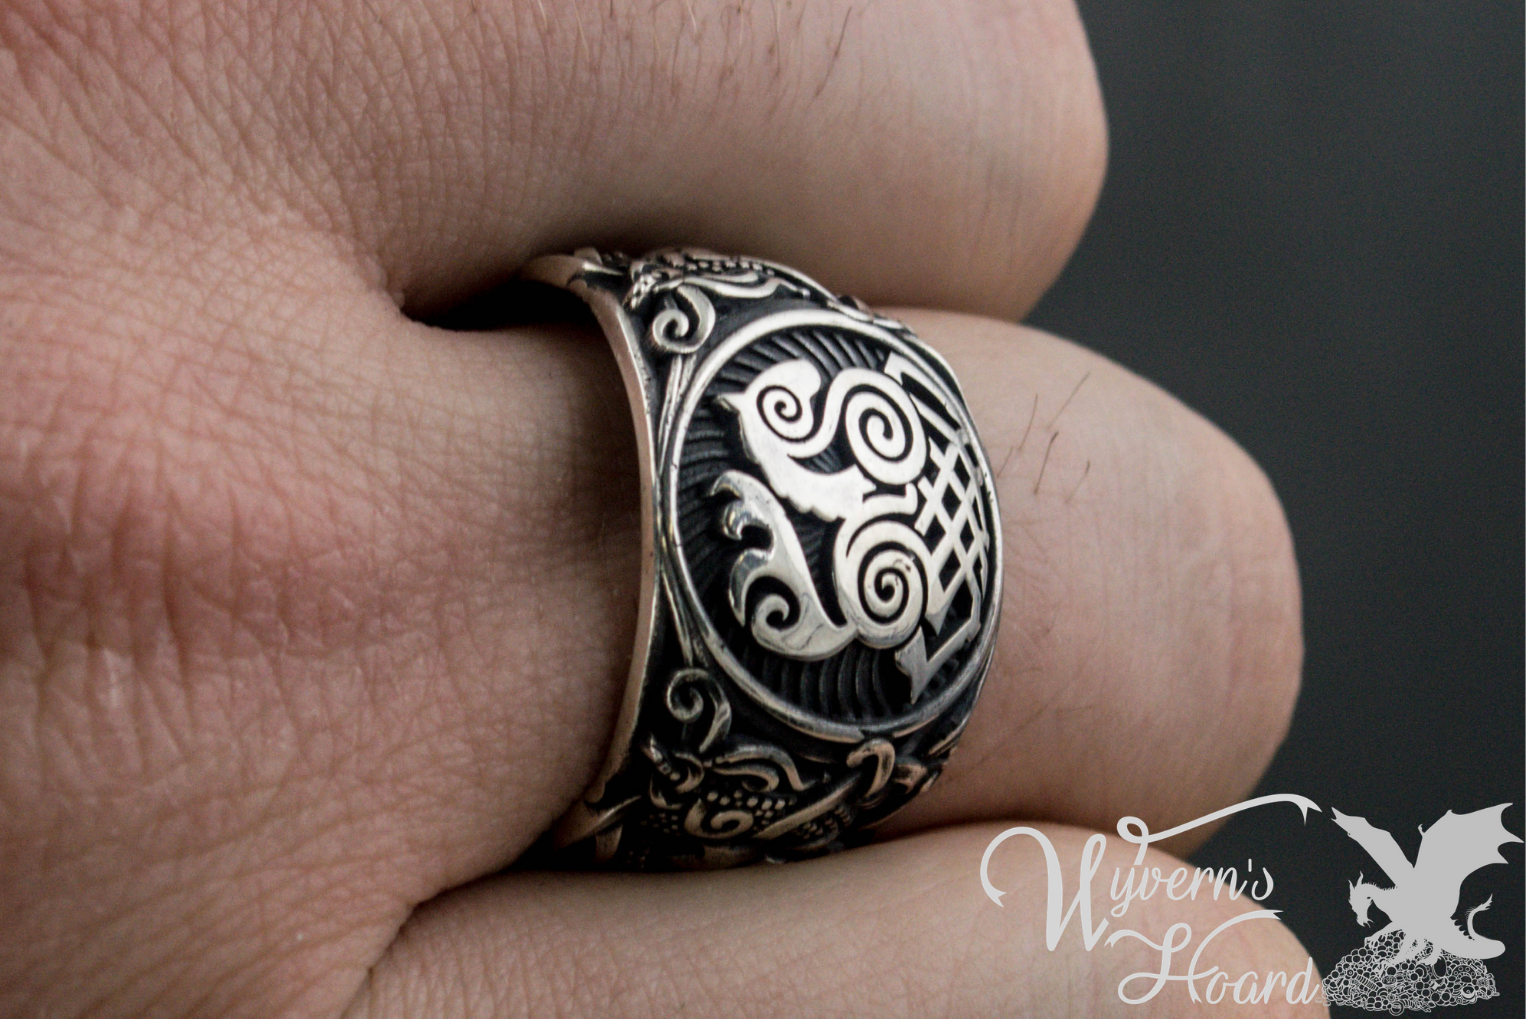 The Mighty Sleipnir Ring - Wyvern's Hoard